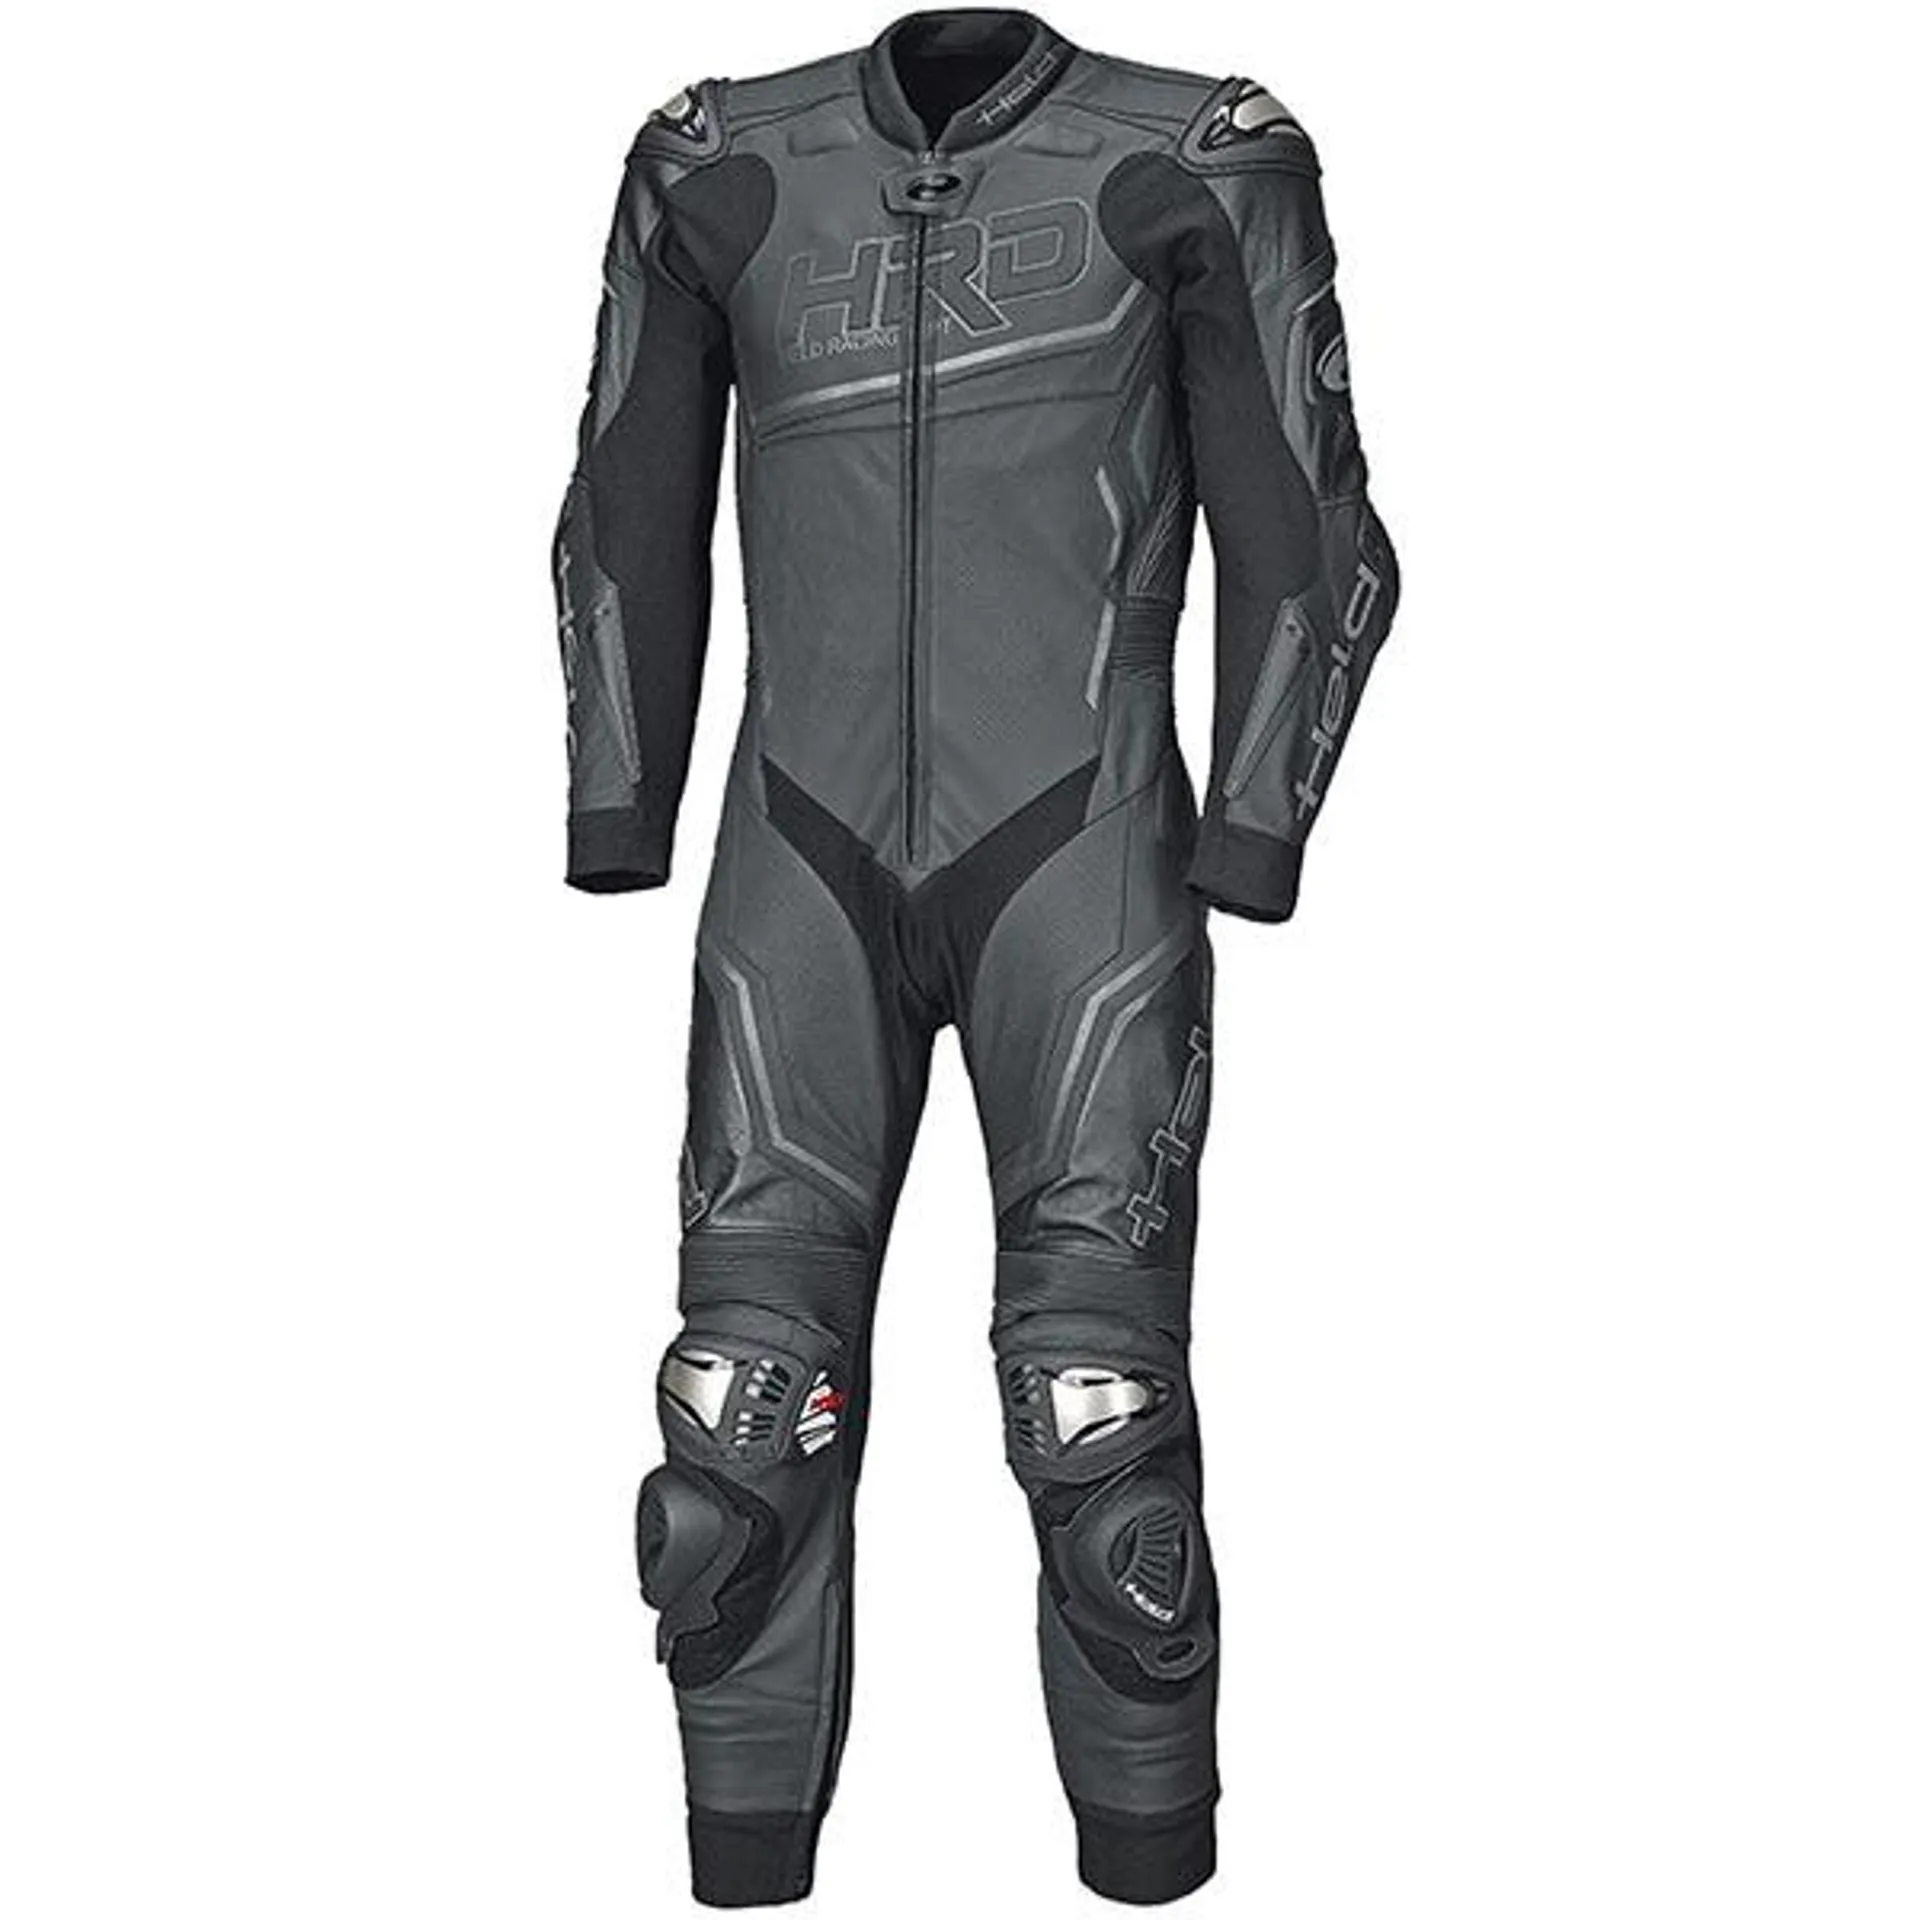 Held Slade II 1 Piece Leather Suit - Black